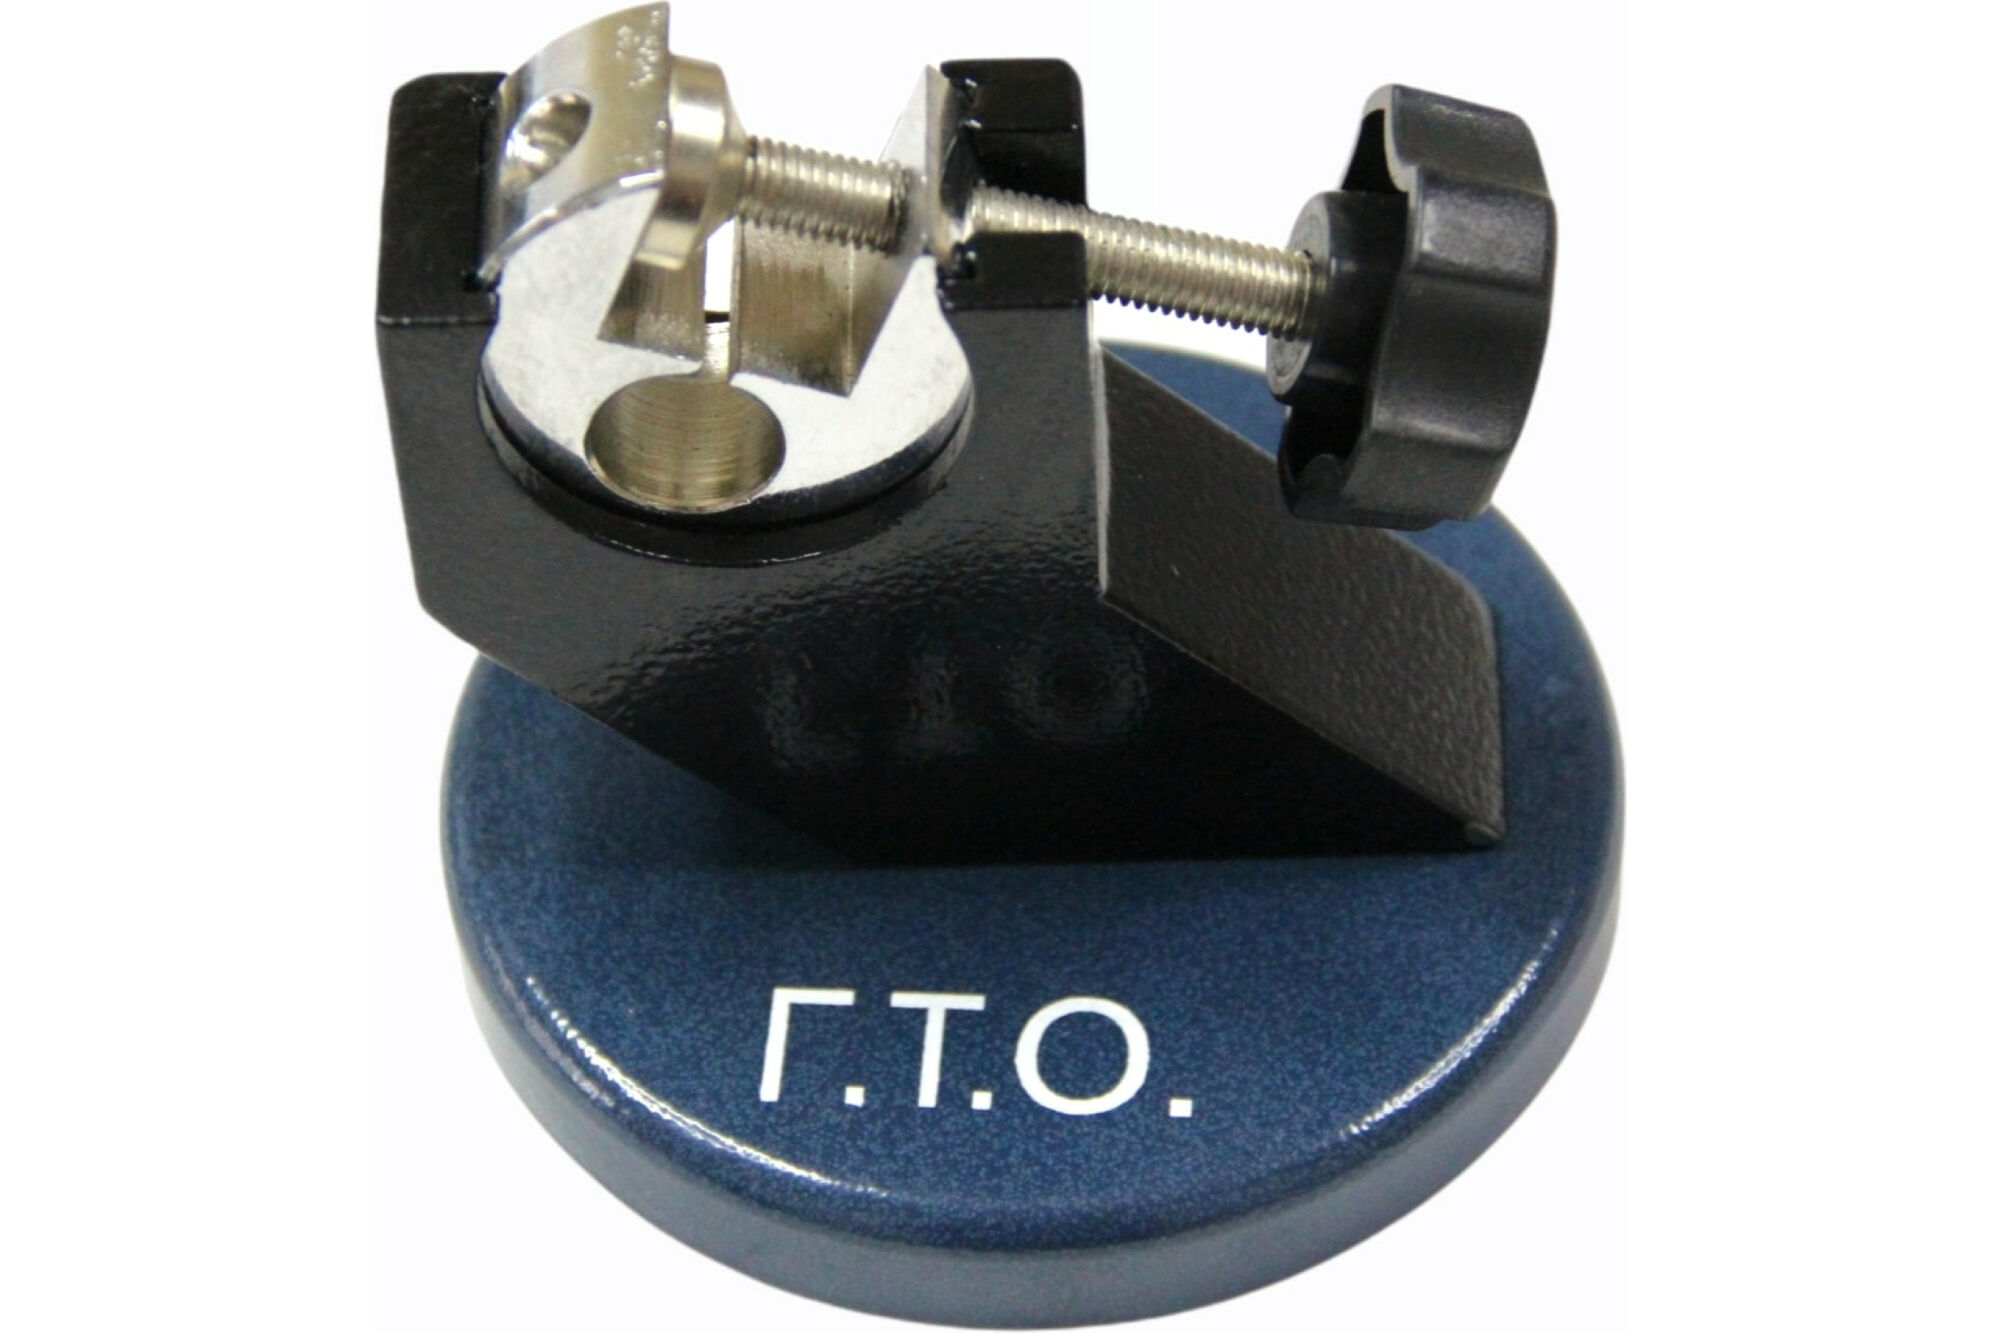 Стойка для микрометров ГТО 15 СТМ RVCT1501